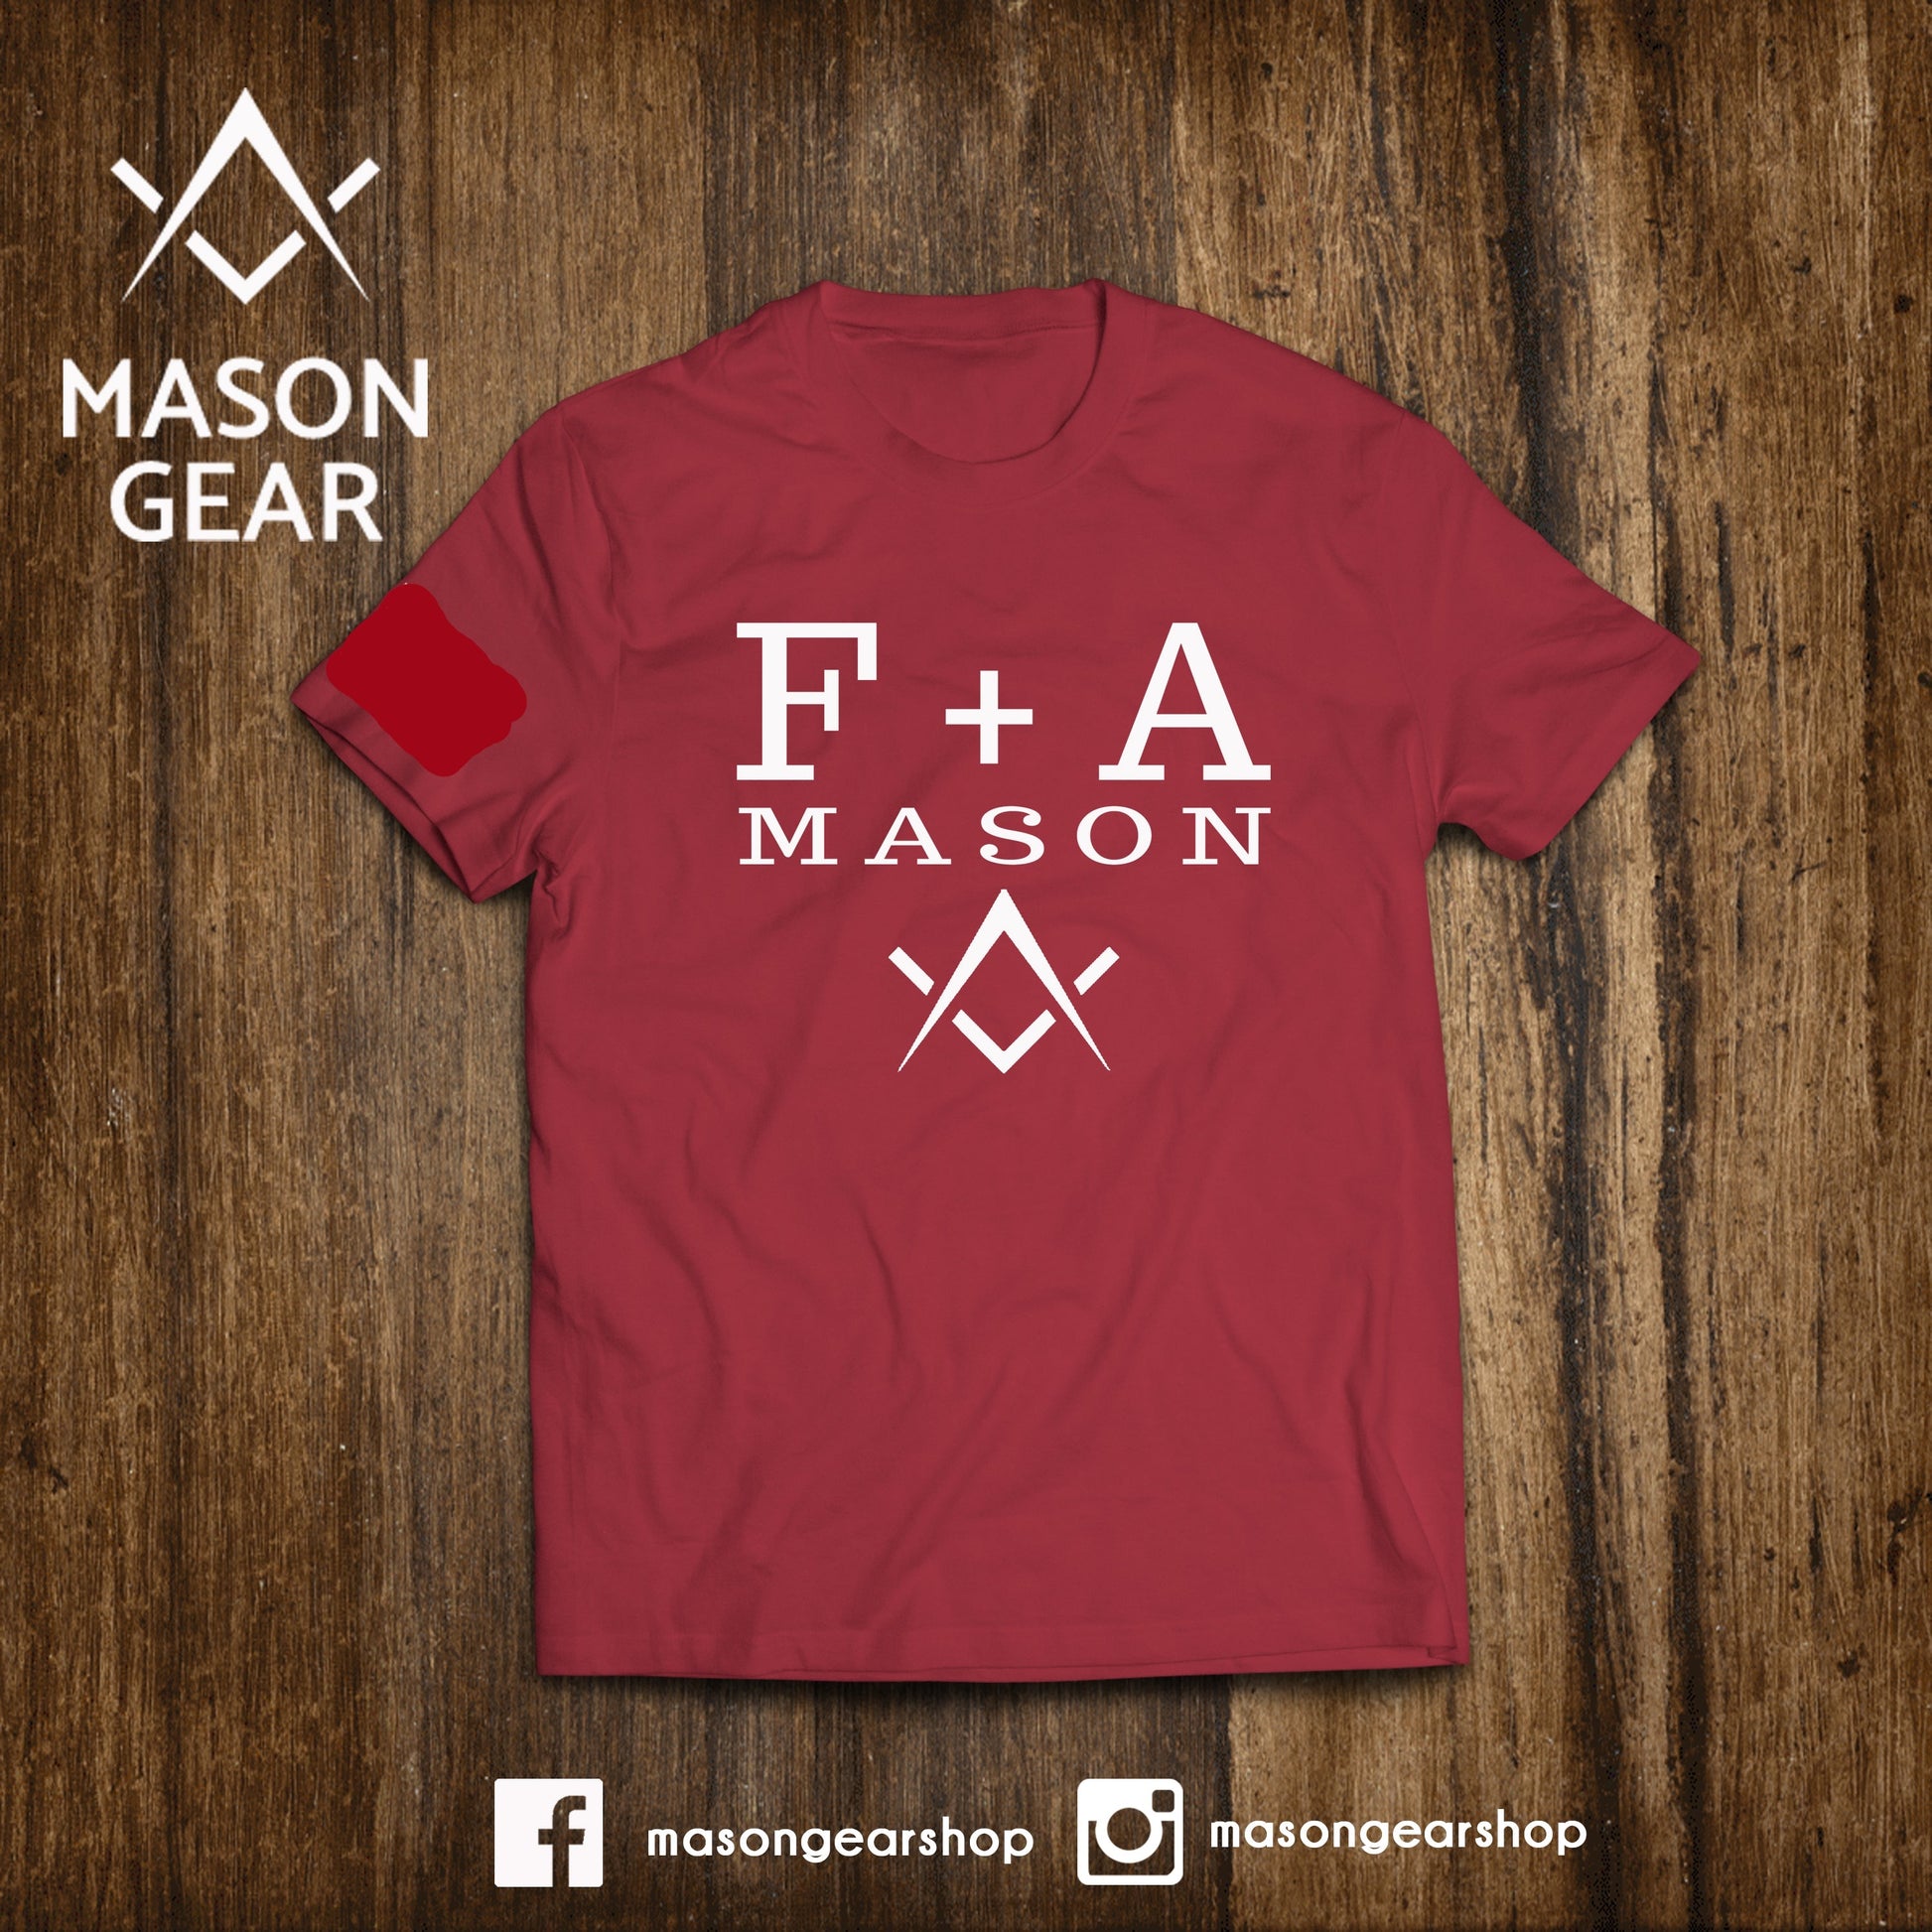 Free and Accepted Mason  - tshirt - Mason Gear Shop